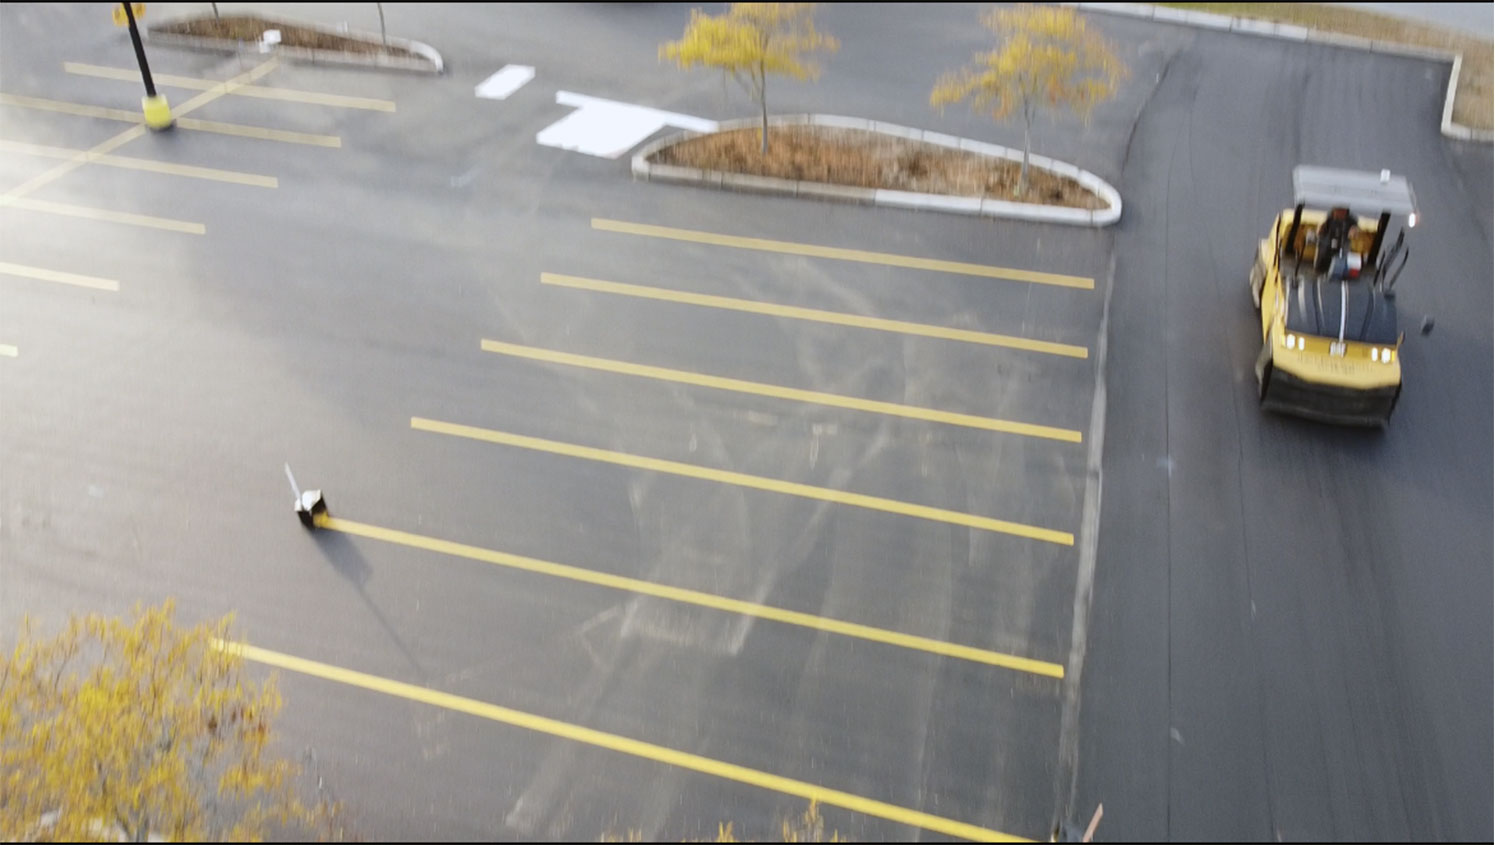 freshly striped parking stalls at a Walmart